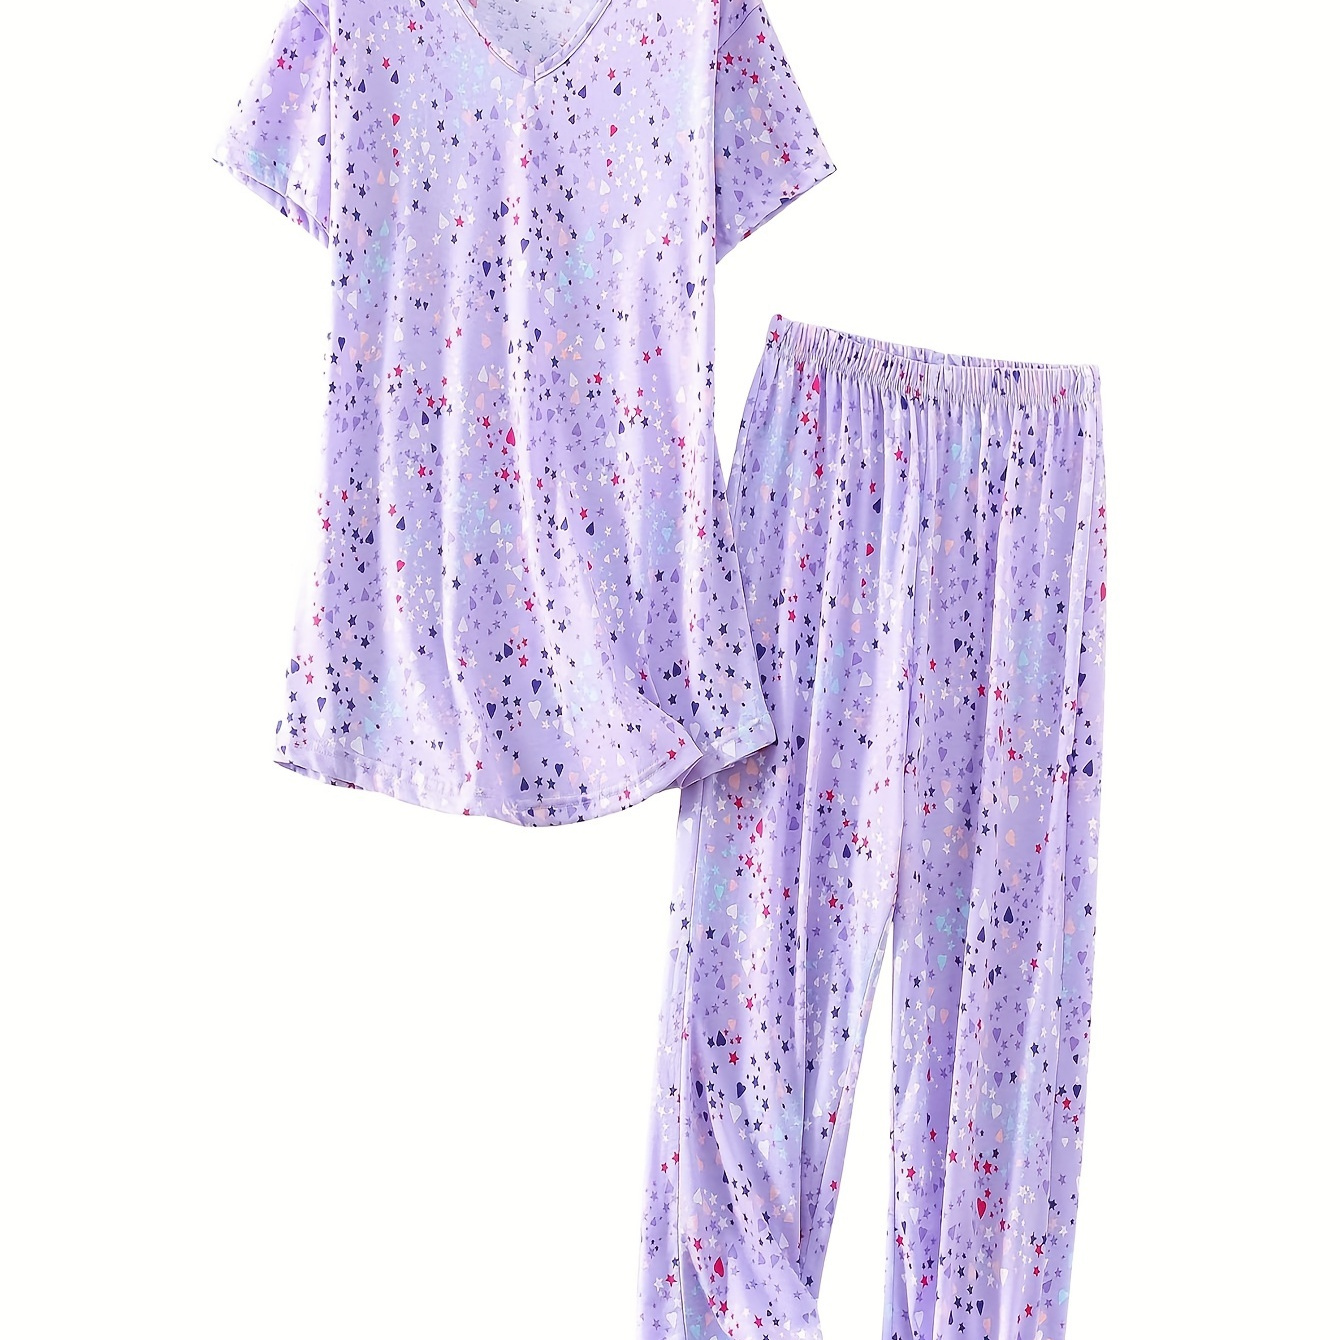 

Women's Pajama Set, Casual Summer Sleepwear, Short Sleeve Top With Capri Pants, Star Print Loungewear Pjs